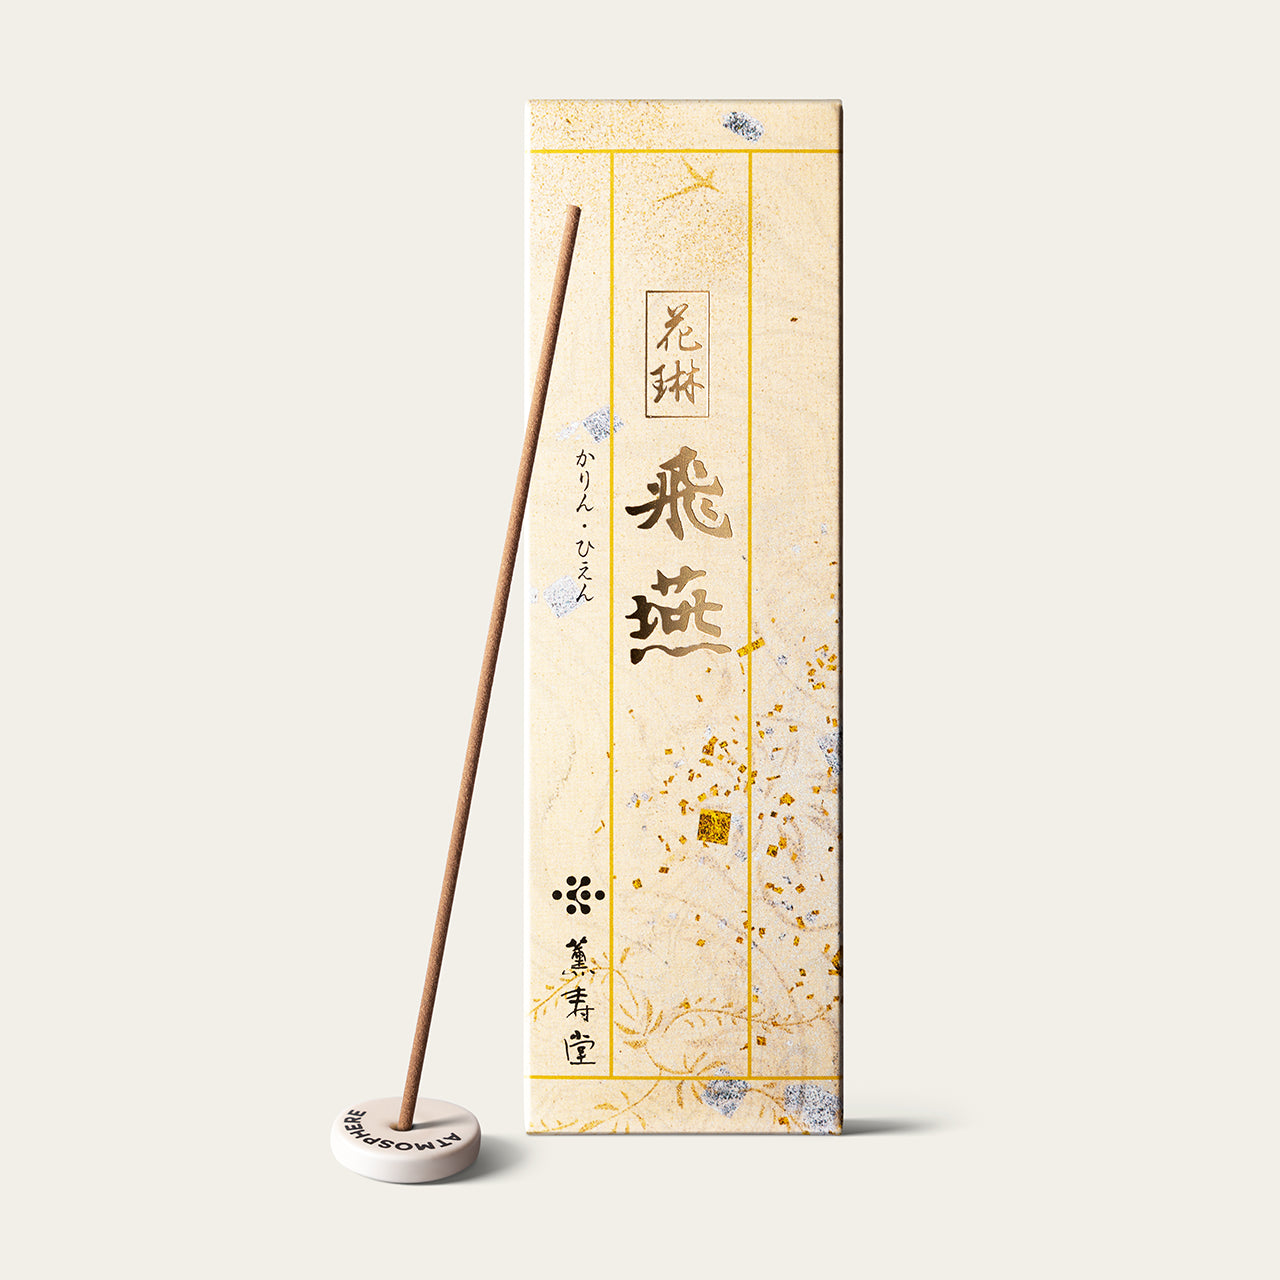 Kunjudo Flight of Swallows Karin Hien Japanese incense sticks (80 sticks) with Atmosphere ceramic incense holder